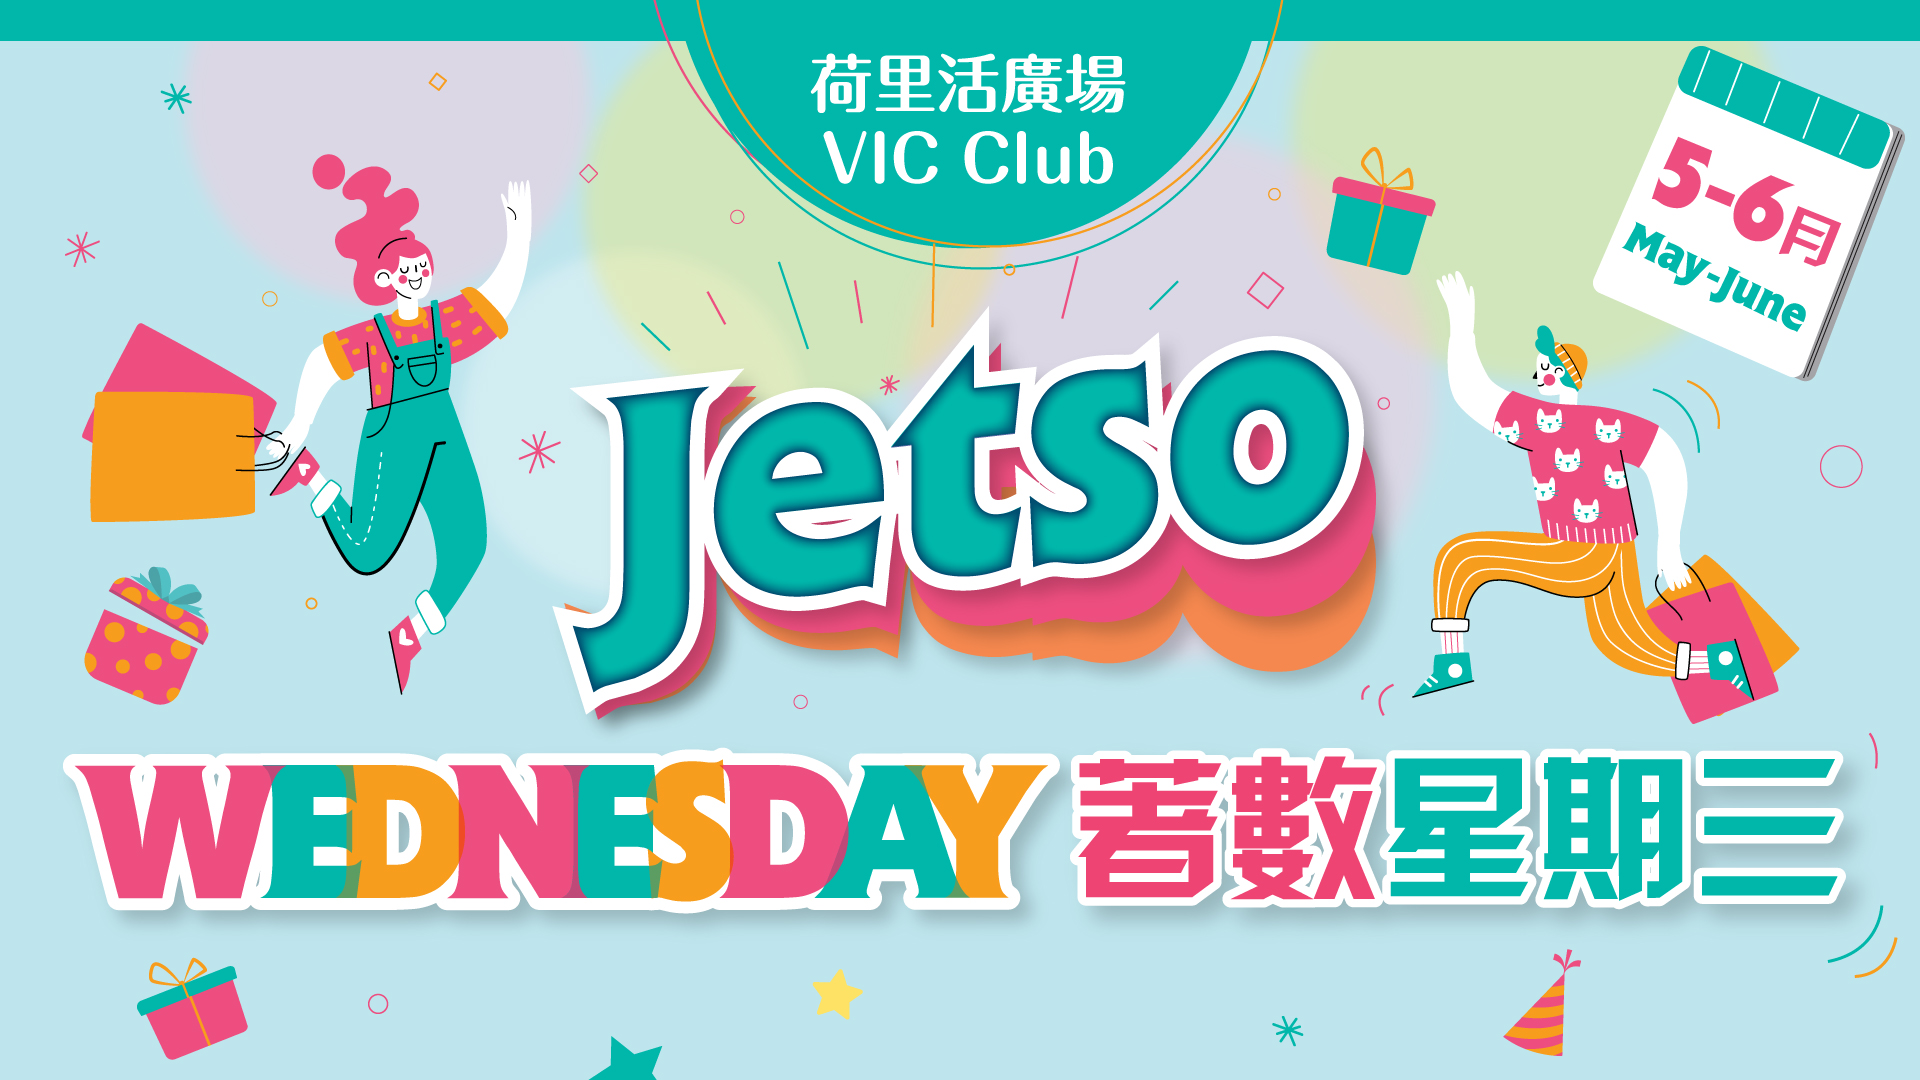 Jetso Wednesday 着数星期三(5-6月)